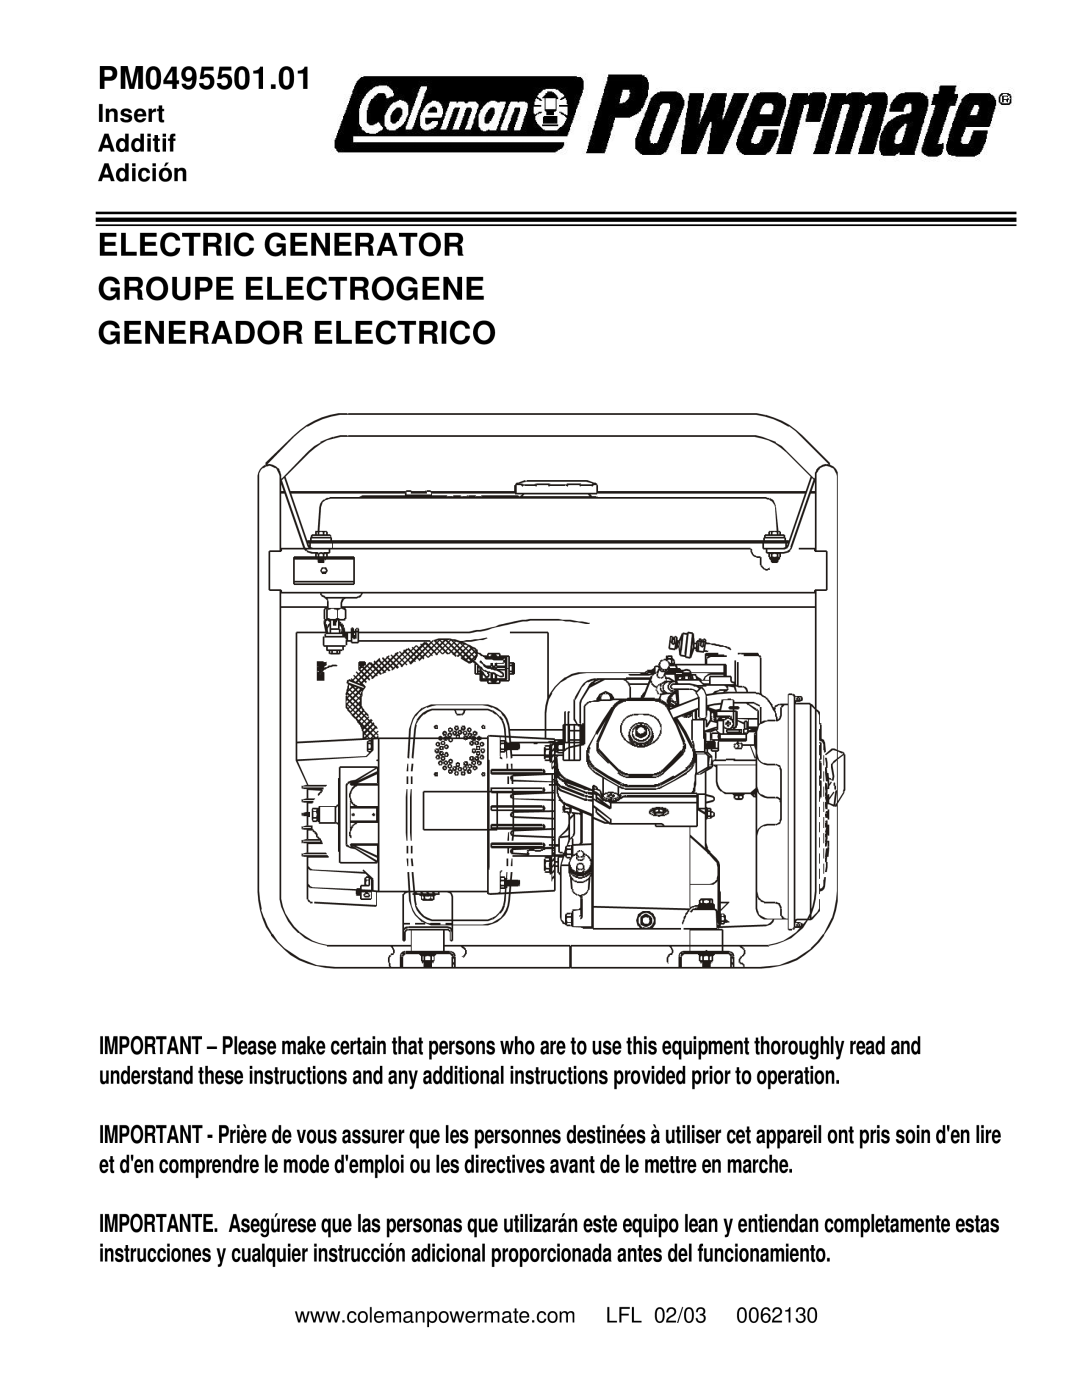 Powermate PM0495501.01 manual Electric Generator Groupe Electrogene Generador Electrico, Insert Additif Adición 